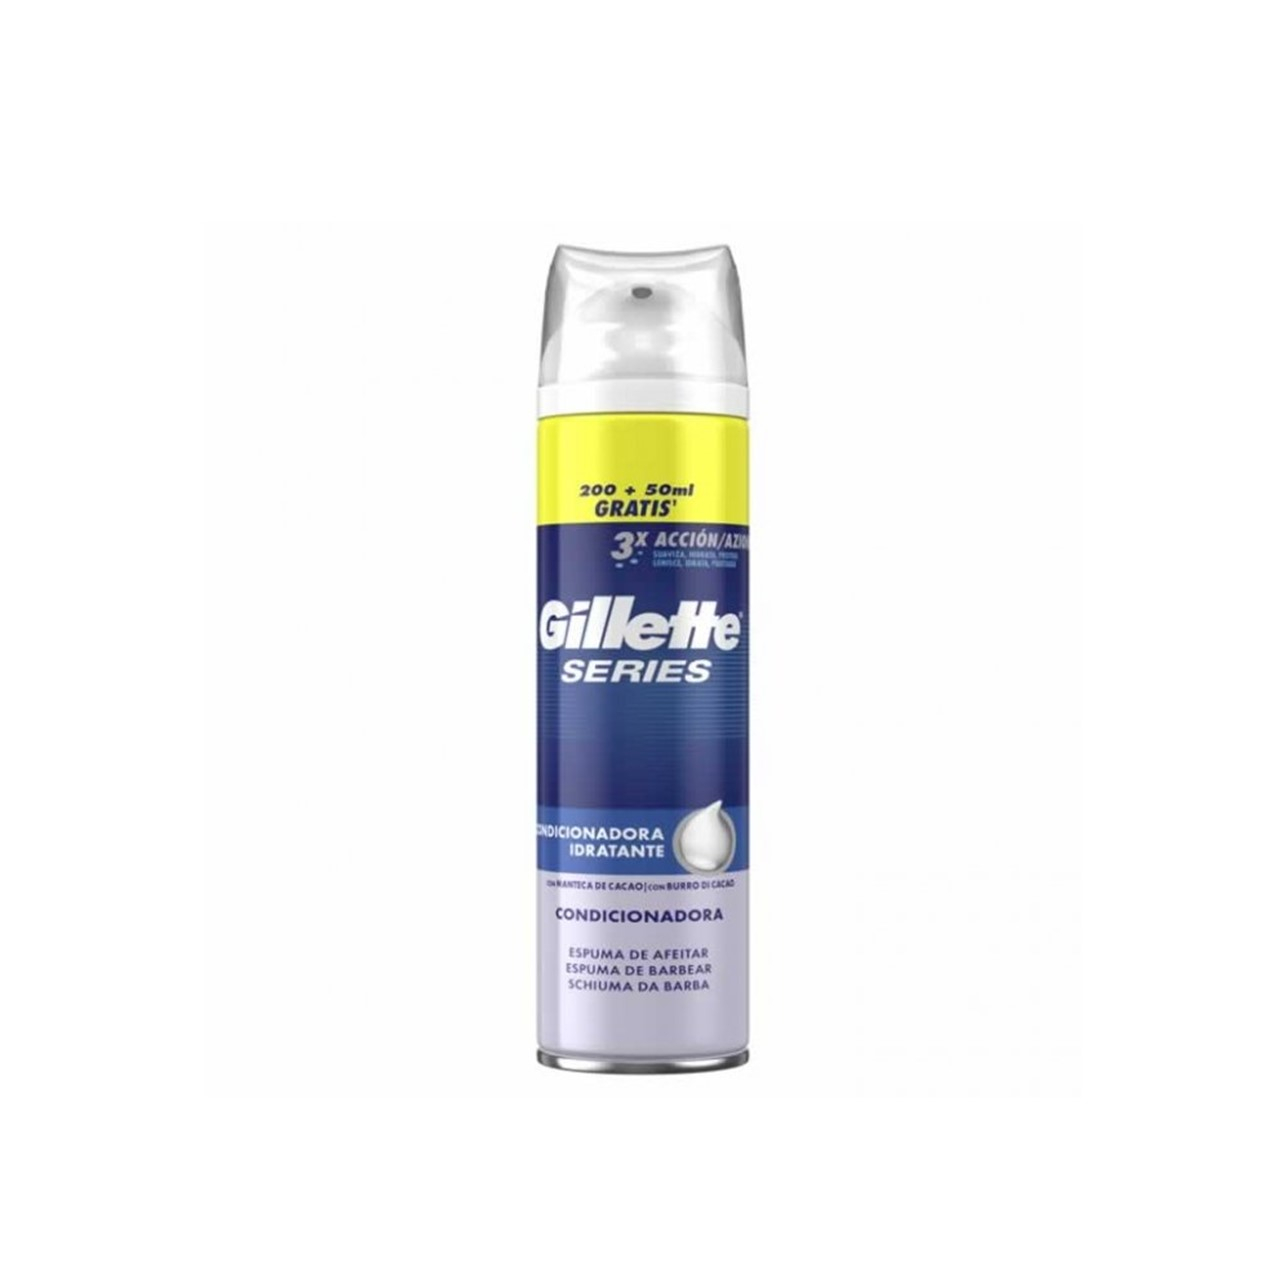 Gillette Series Conditioning Shaving Foam 250ml (8.45fl oz)